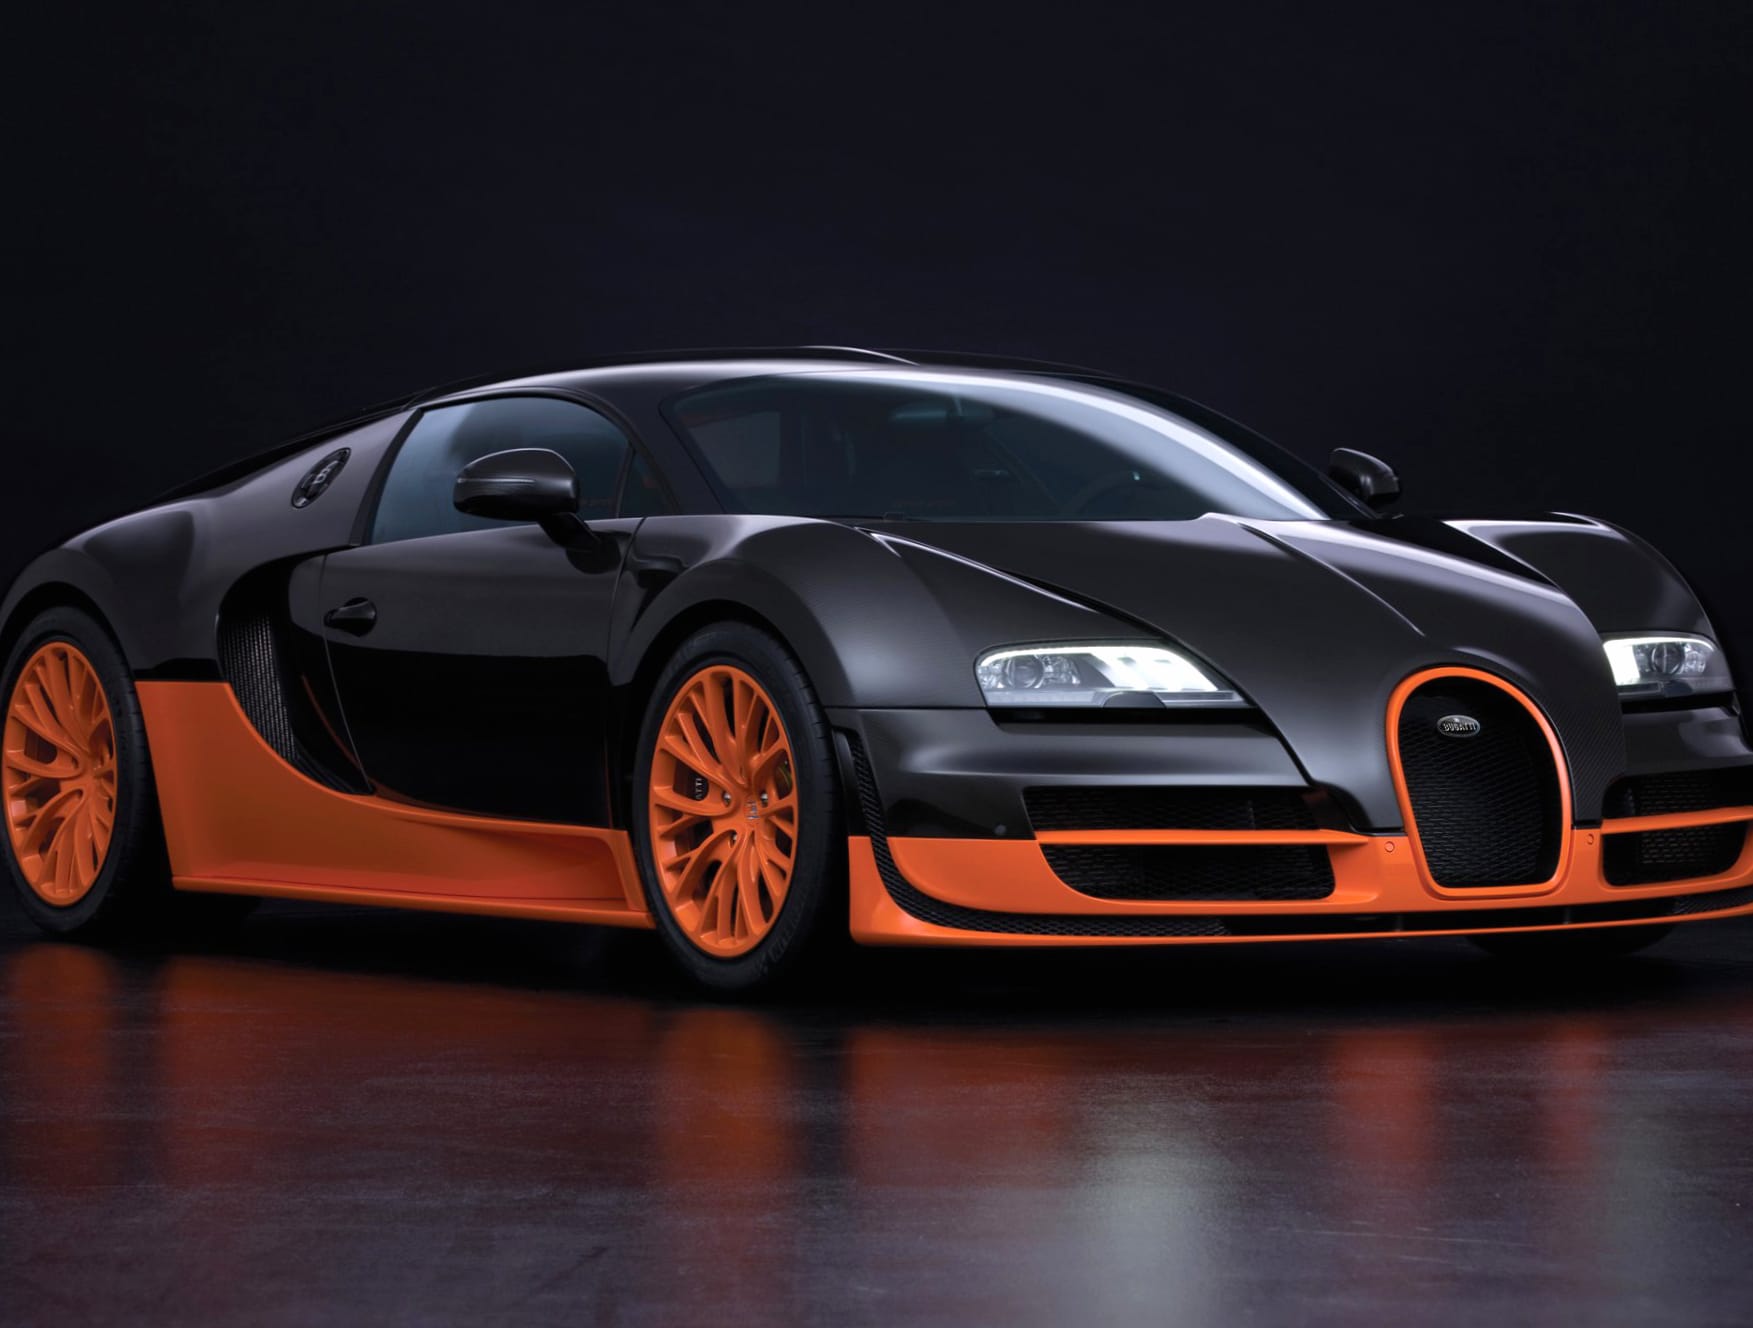 Bugatti Veyron 16-4 Super Sport at 1024 x 1024 iPad size wallpapers HD quality